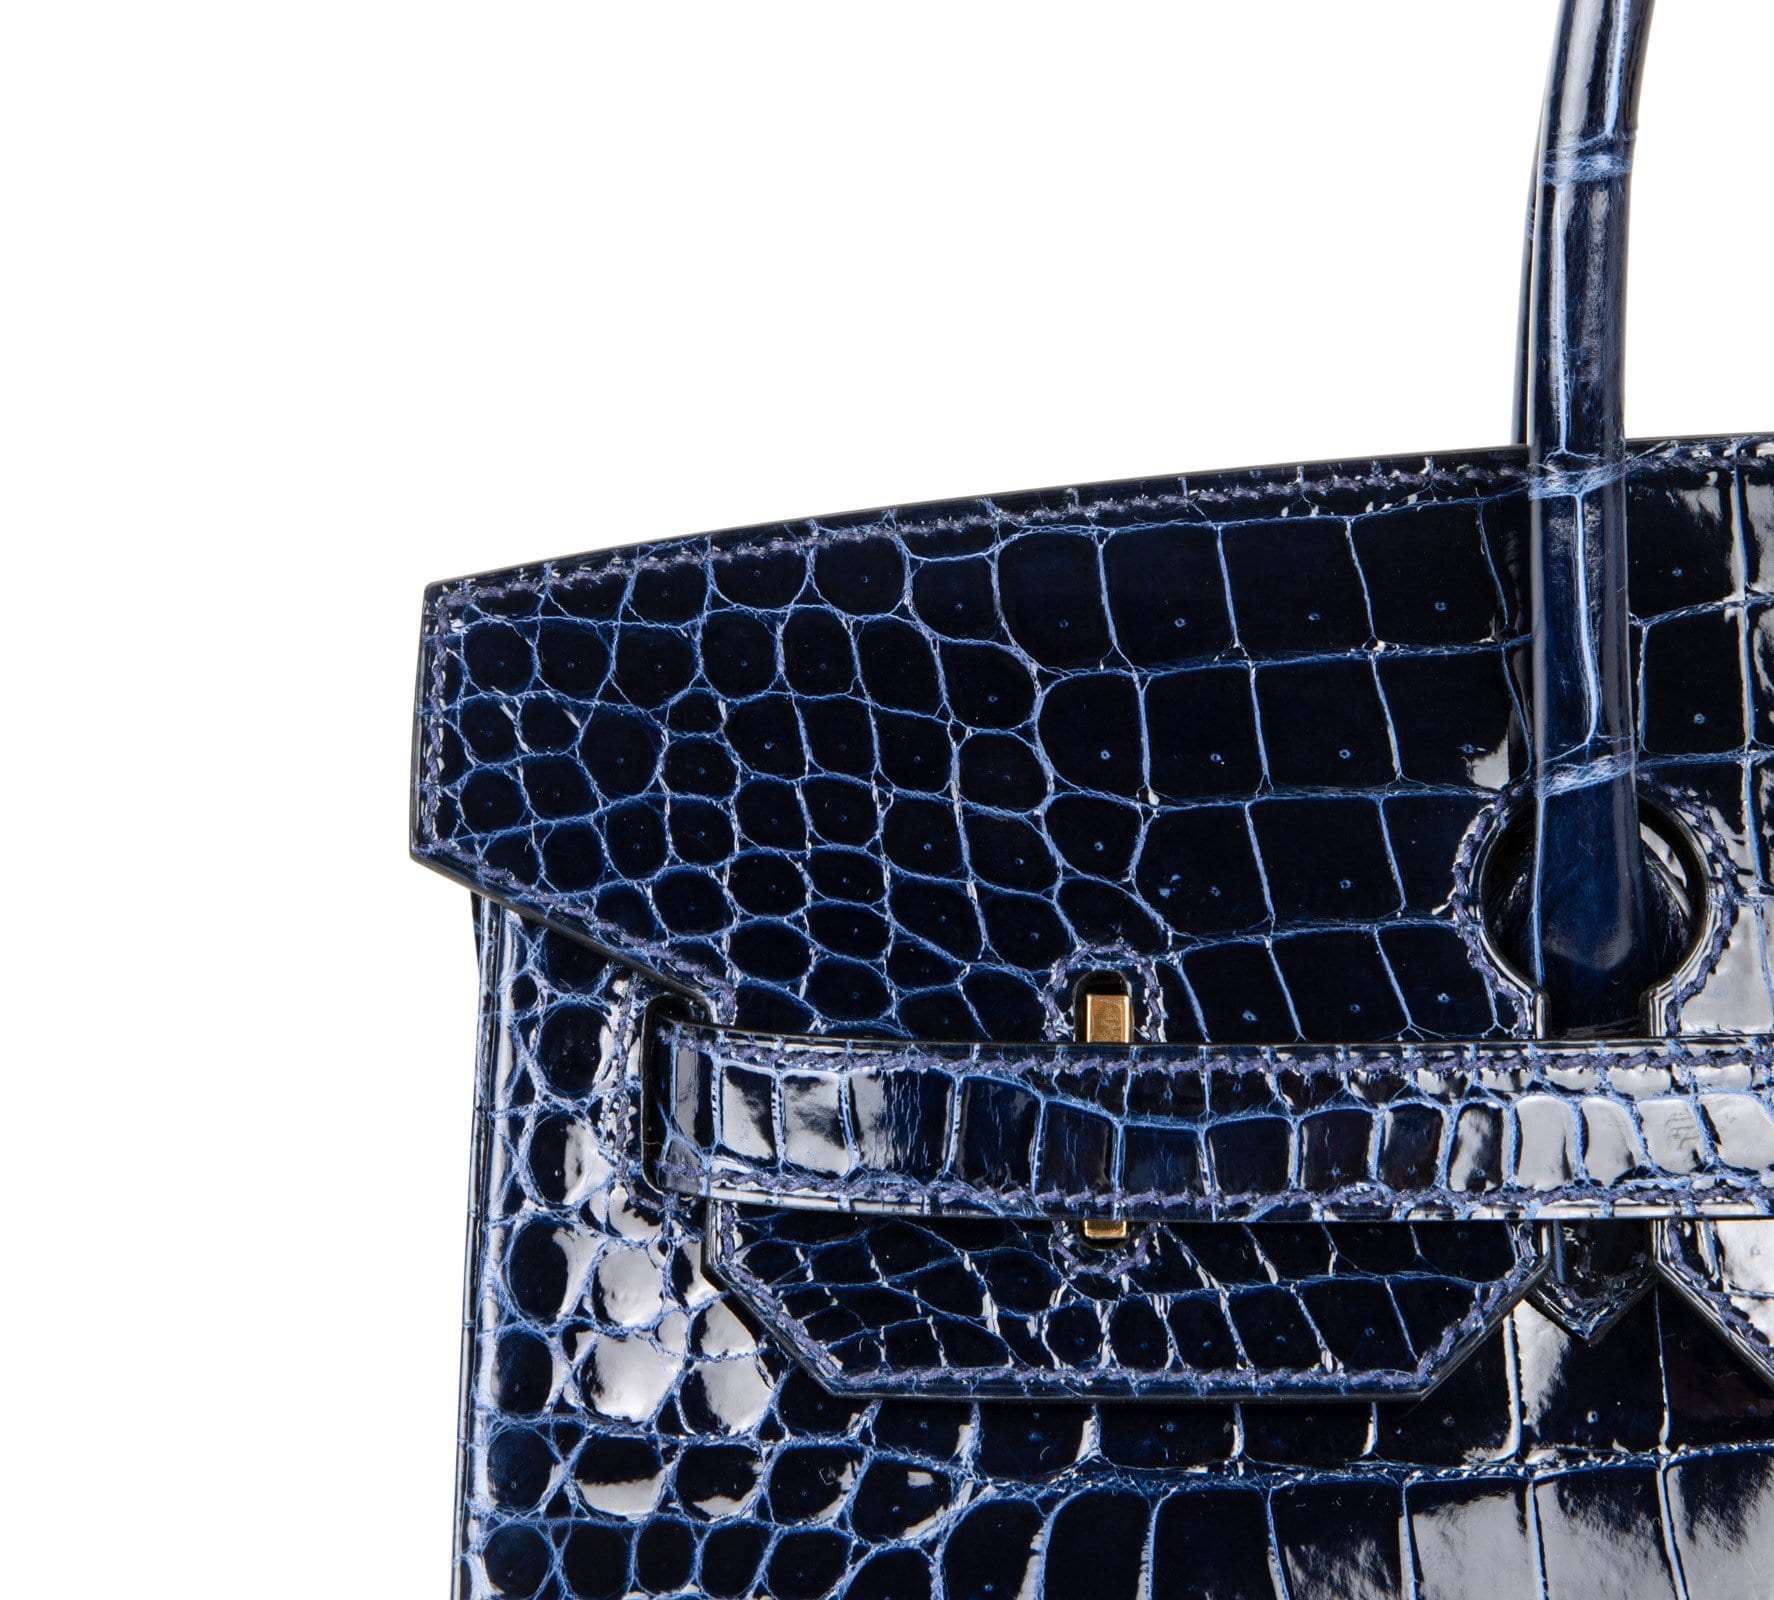 Hermès Birkin 35 Miel Porosus Crocodile Bag with Diamonds